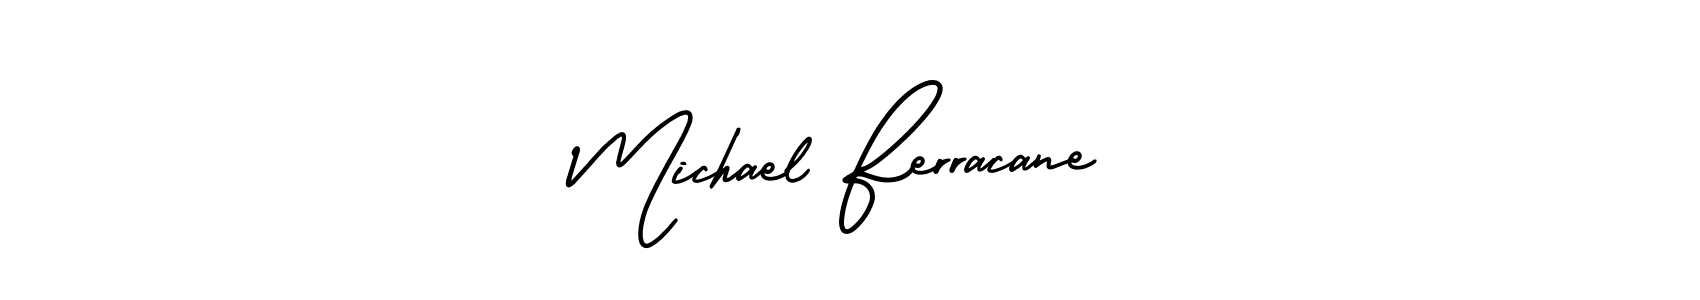 How to Draw Michael Ferracane signature style? AmerikaSignatureDemo-Regular is a latest design signature styles for name Michael Ferracane. Michael Ferracane signature style 3 images and pictures png